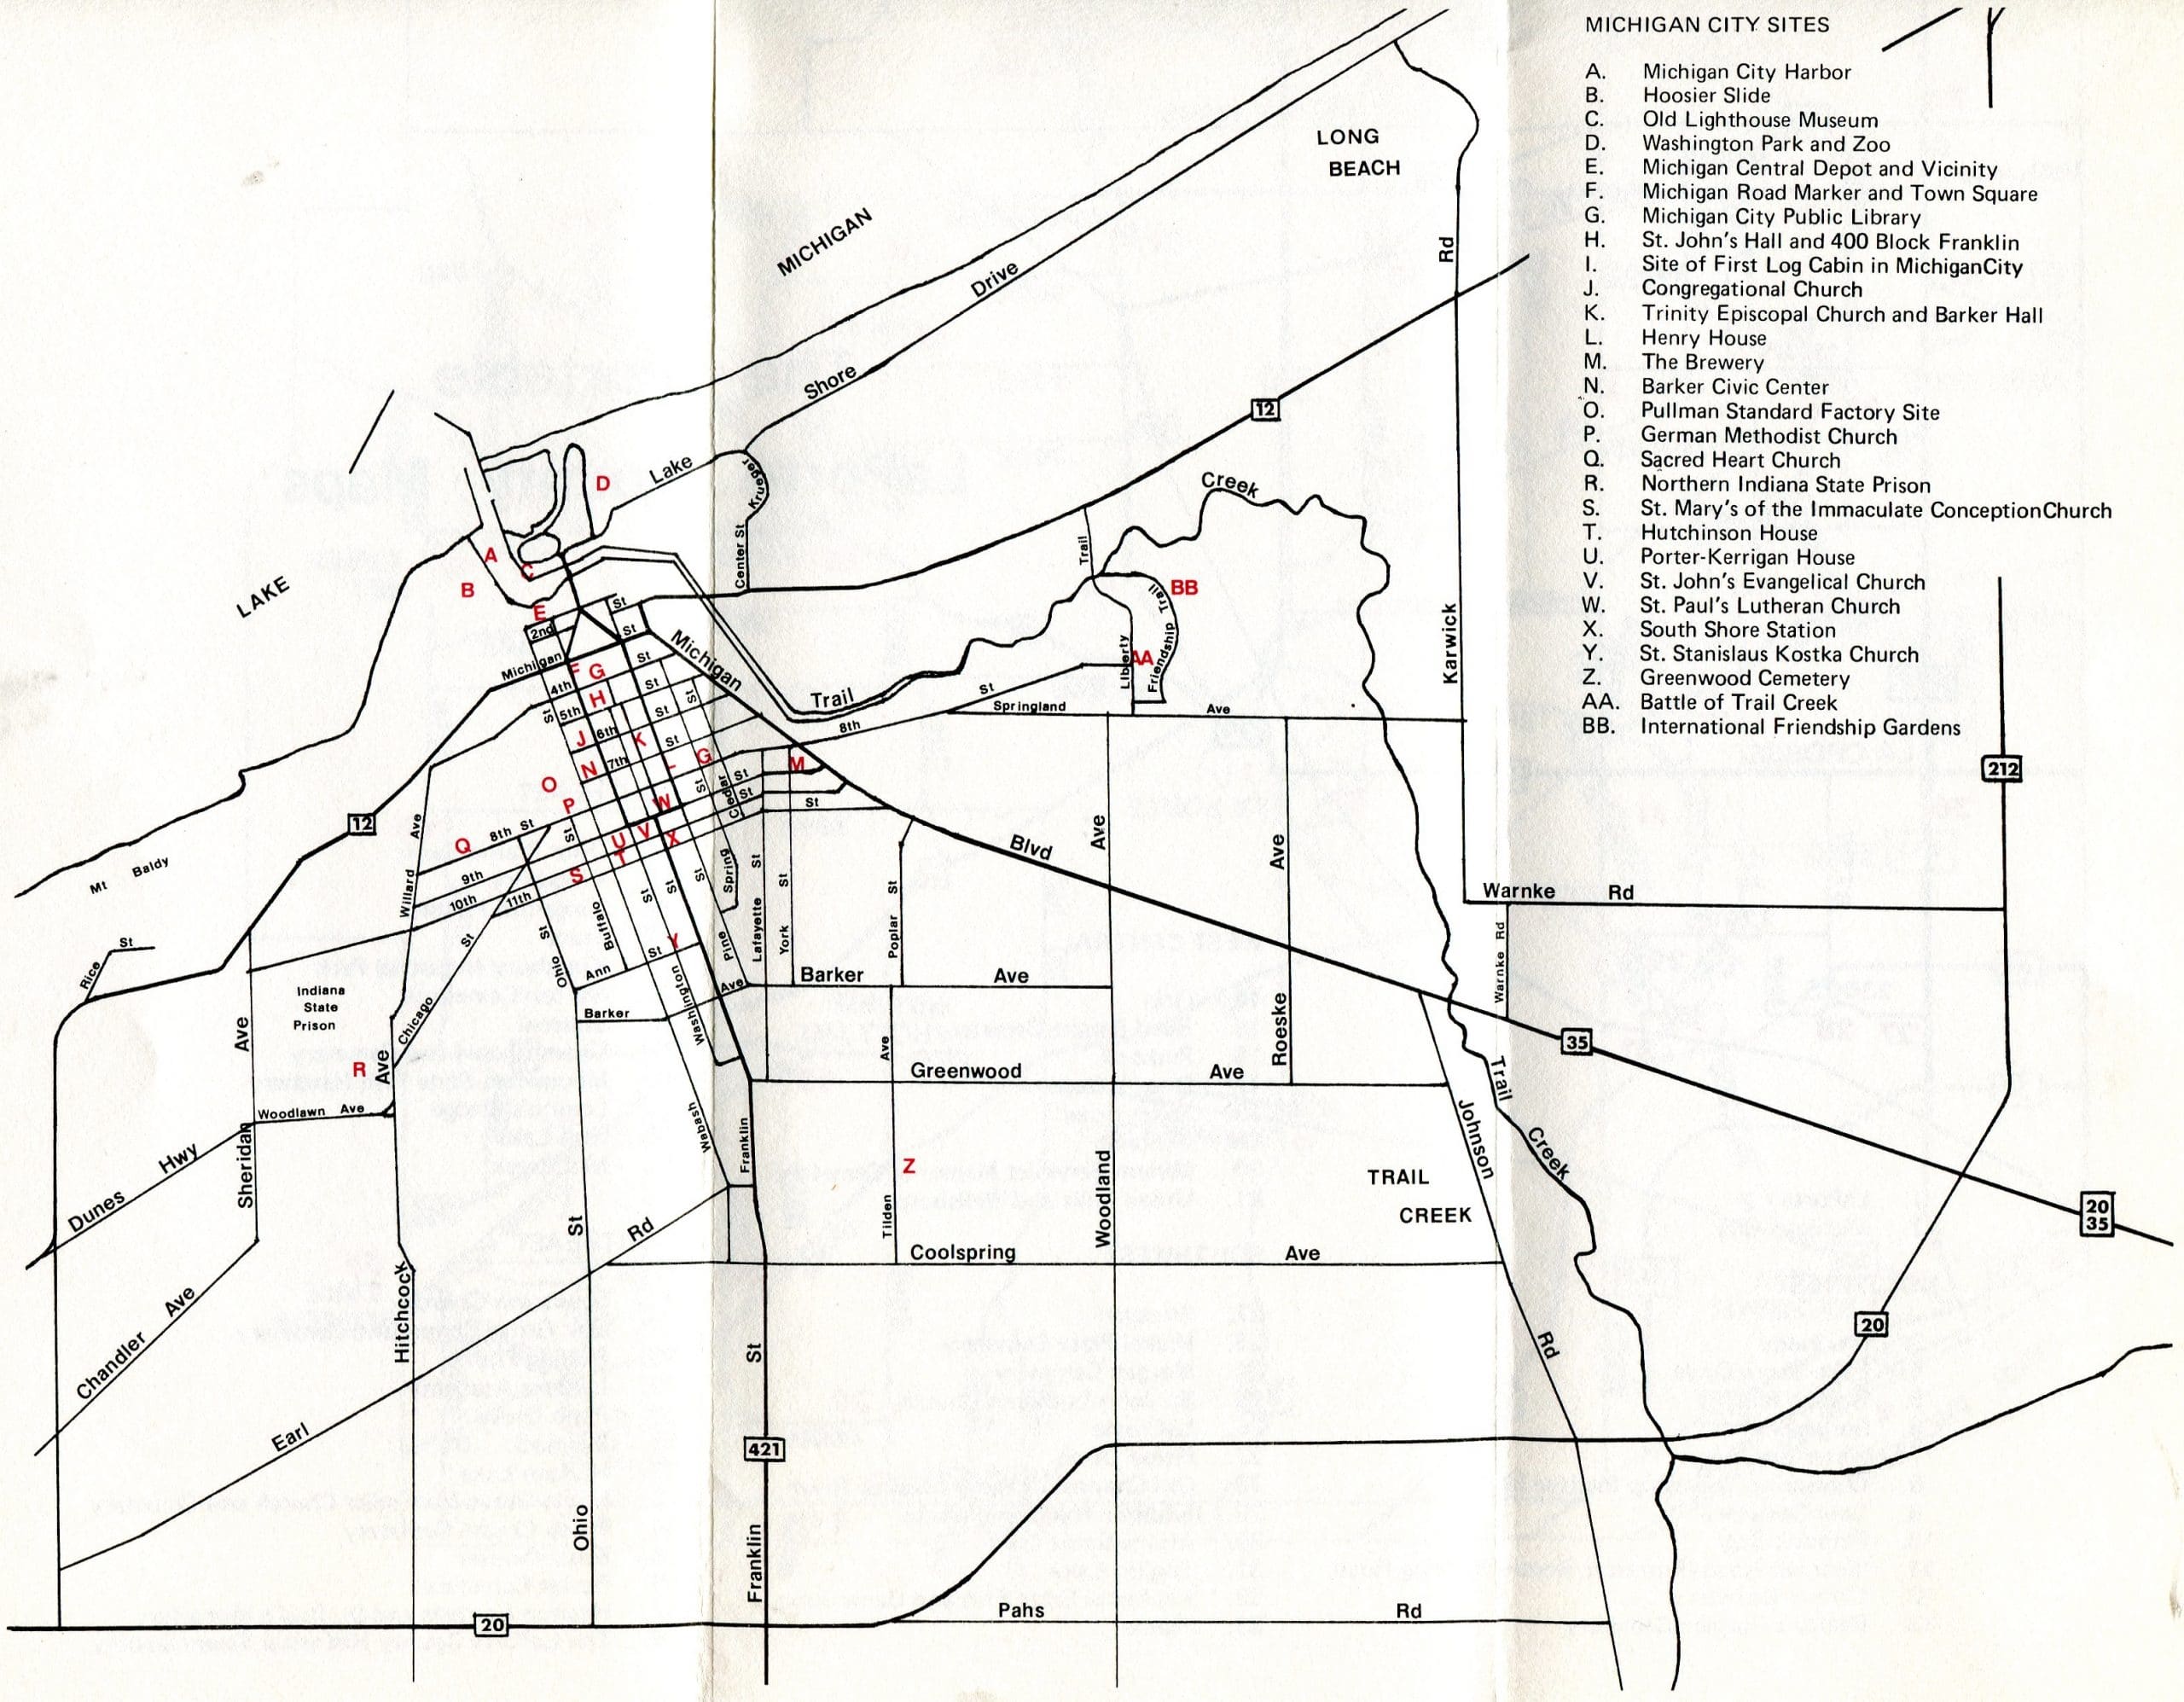 Portable LaPorte County -- map of Michigan City sites